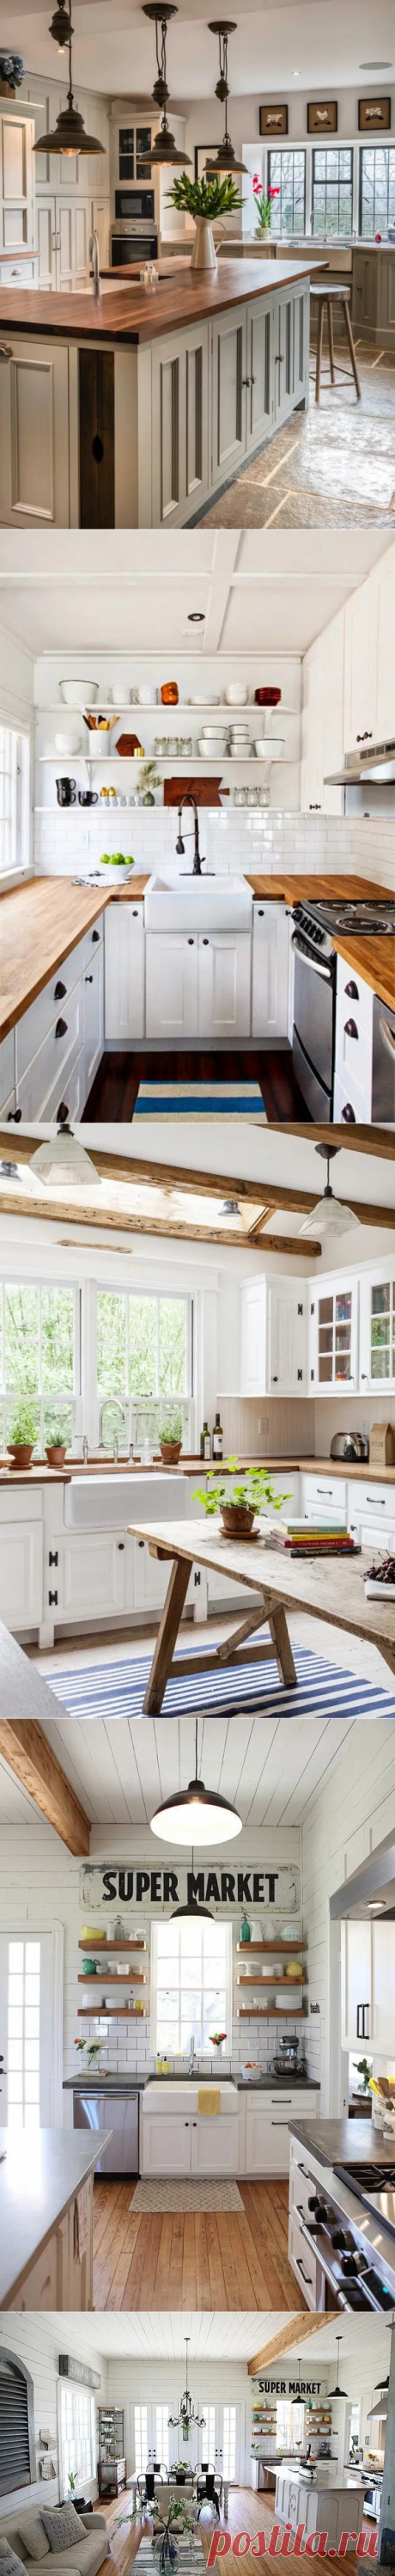 25 Farmhouse Kitchen Decor Ideas You'll Want to Copy